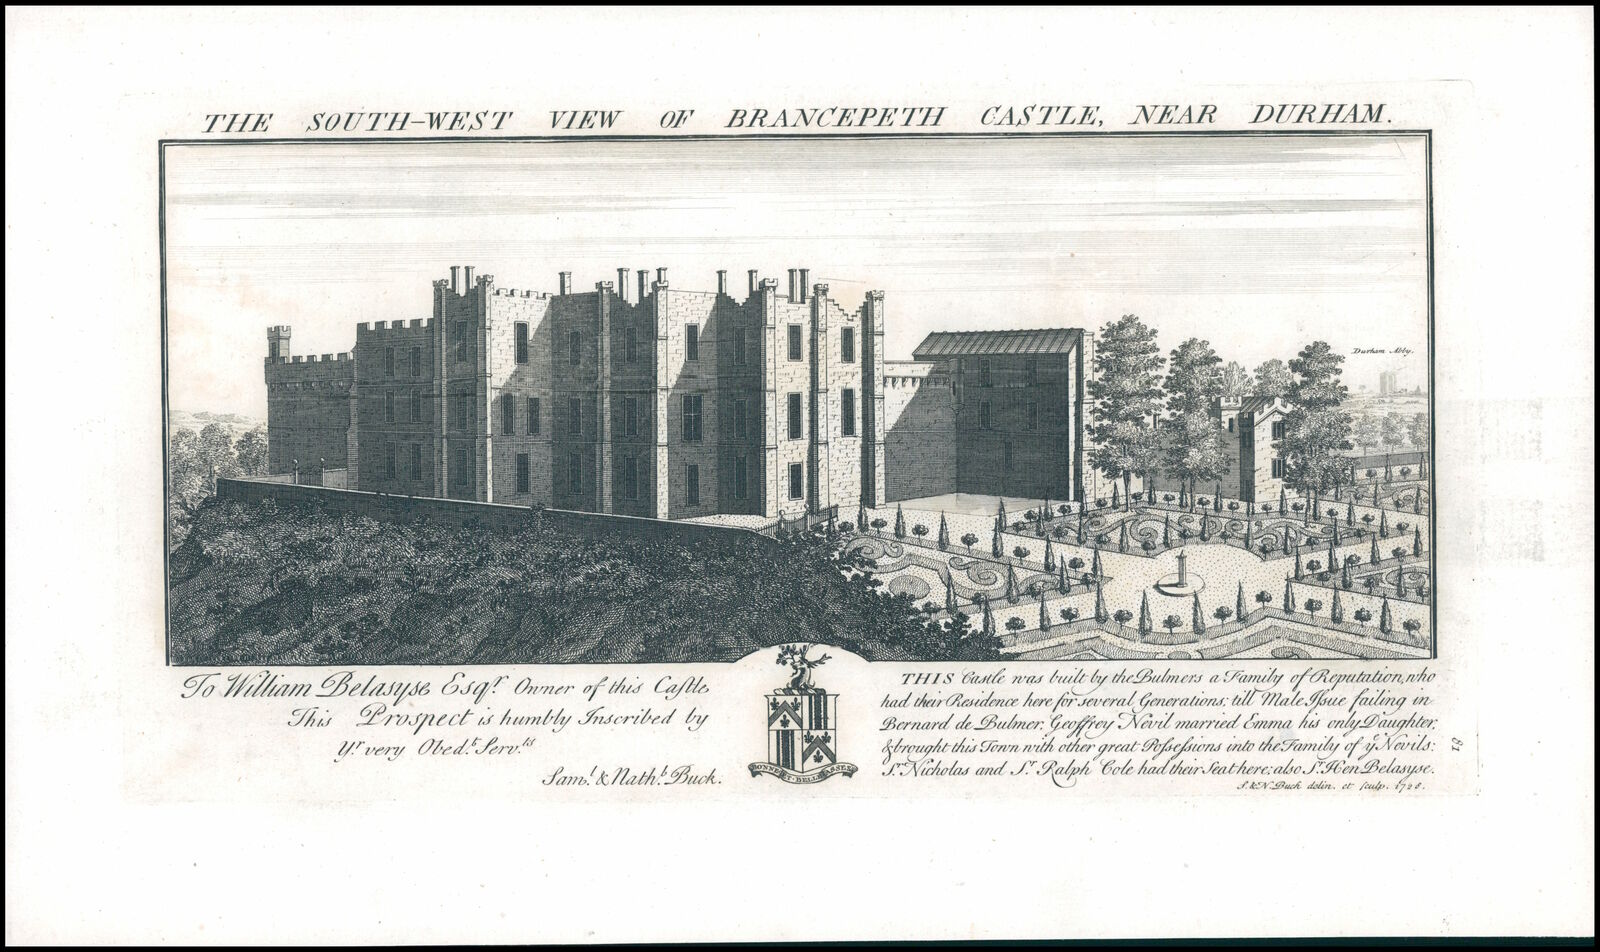 Brancepeth Castle 1730